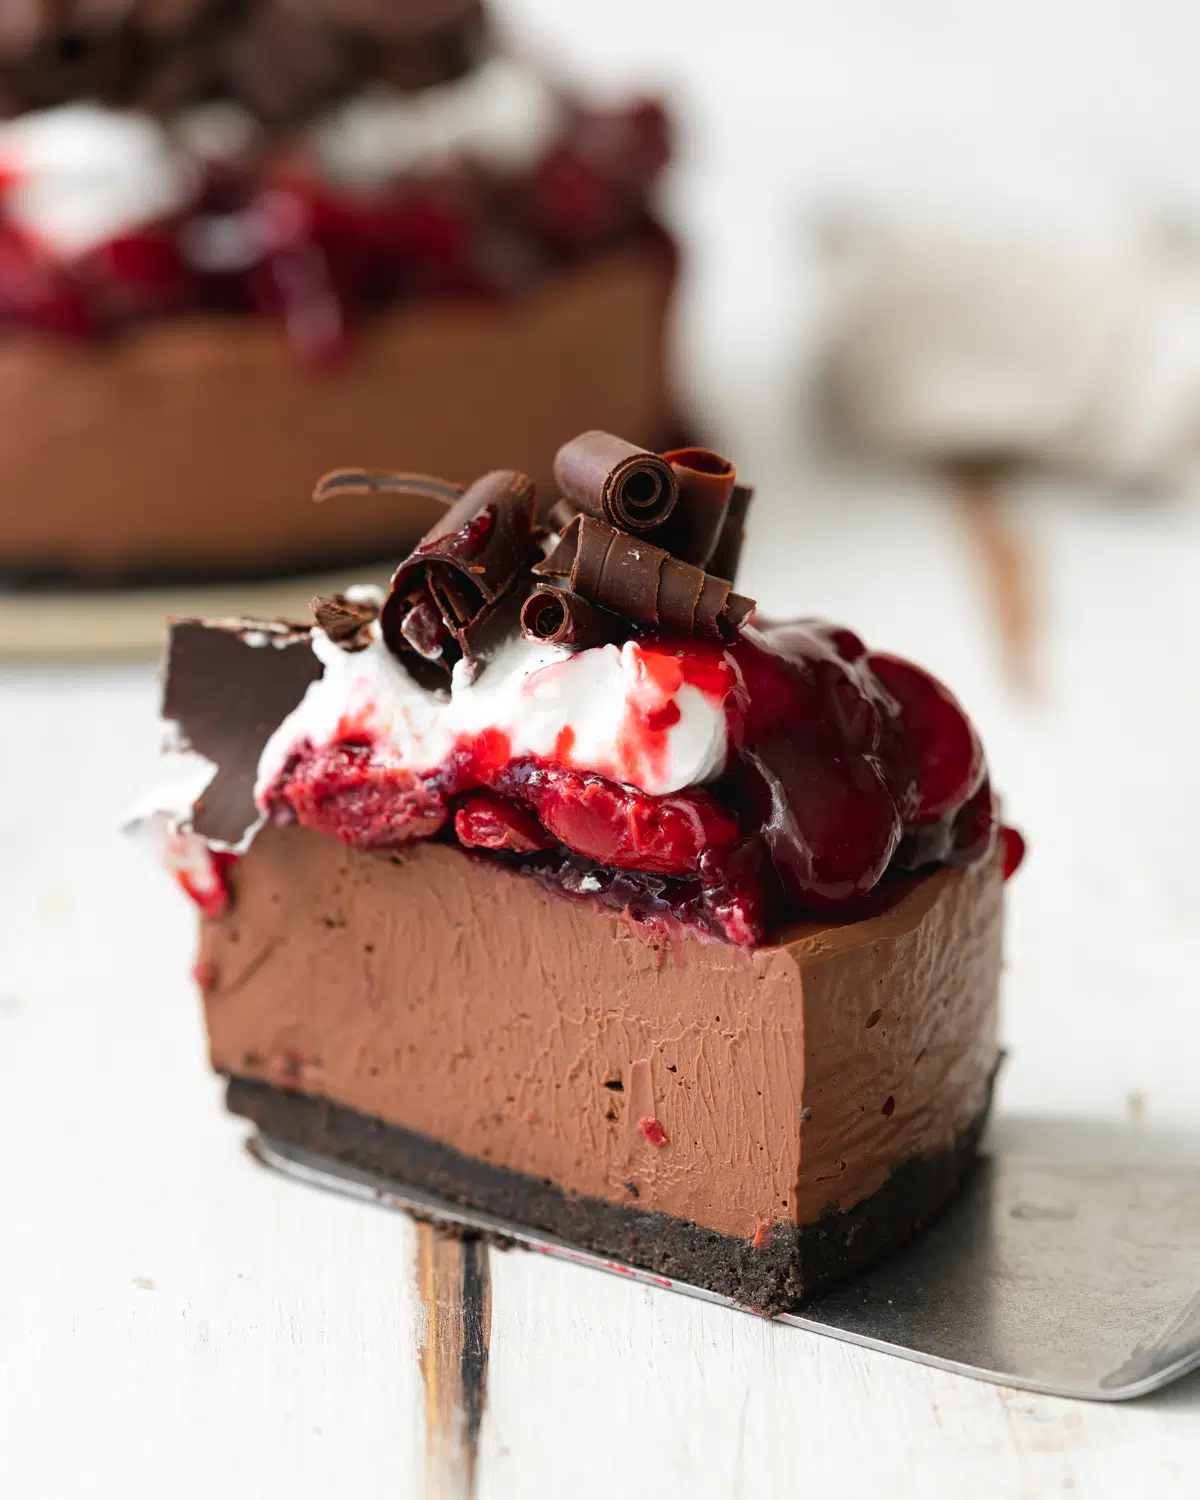 slice of chocolate cheesecake with cherries, cream and chocolate shavings on top.